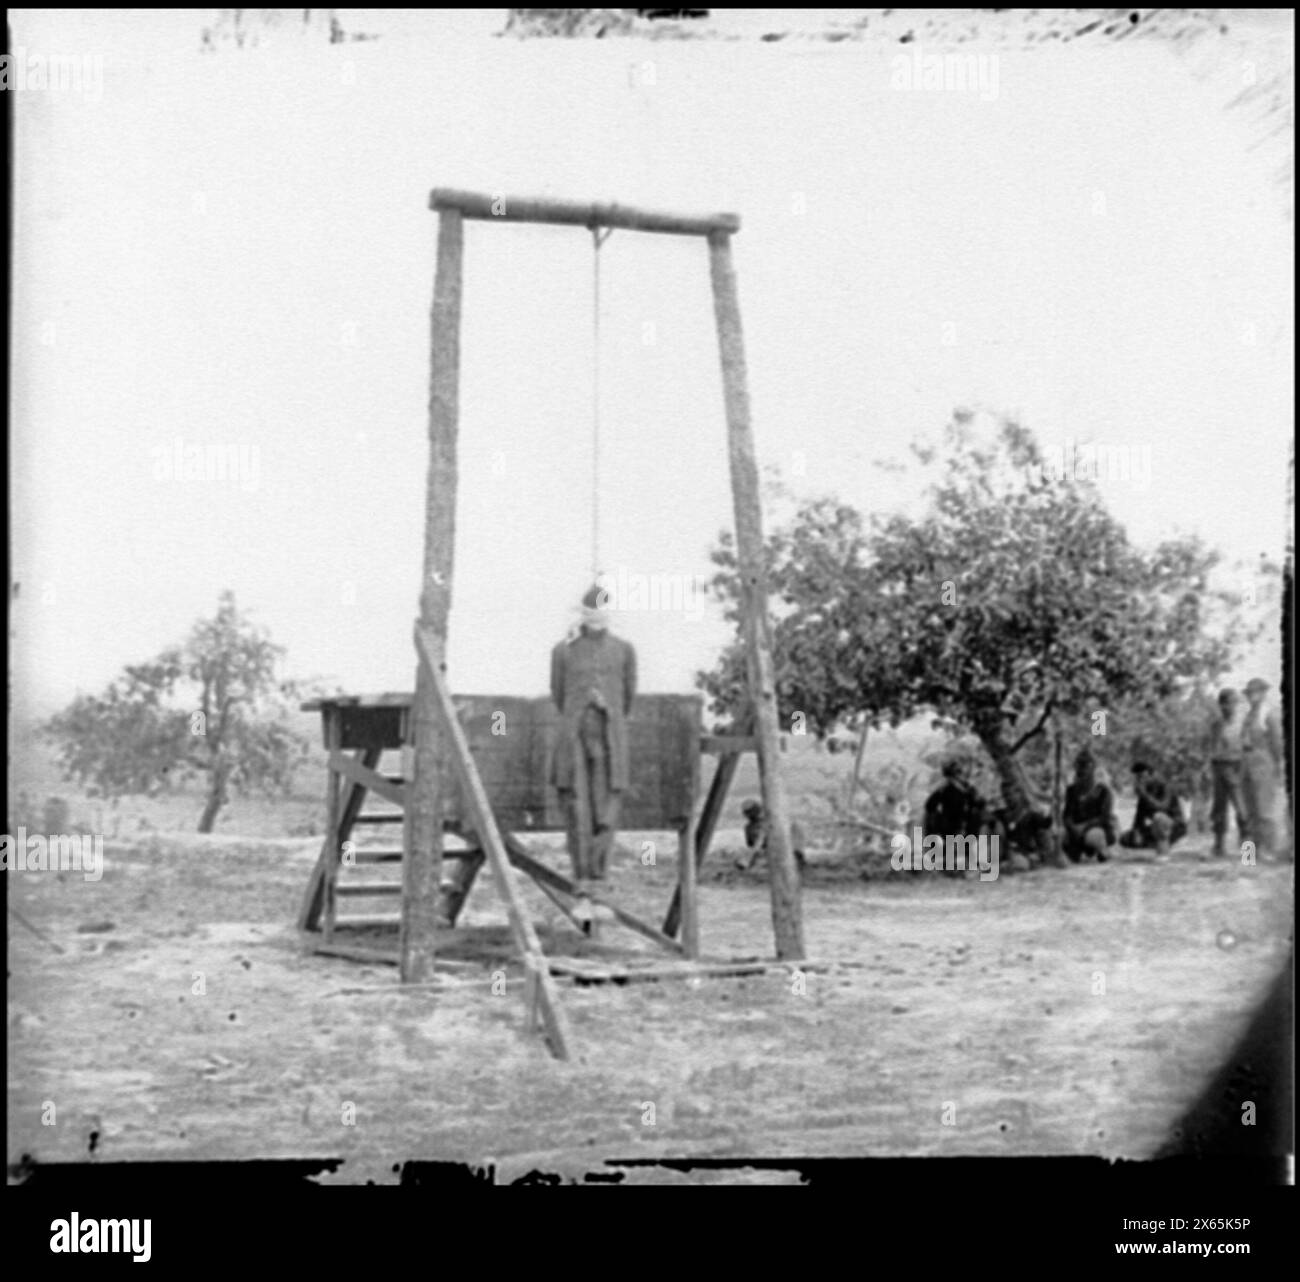 Petersburg, Va., vicinity. The execution of William Johnson, Jordan's farm, Civil War Photographs 1861-1865 Stock Photo